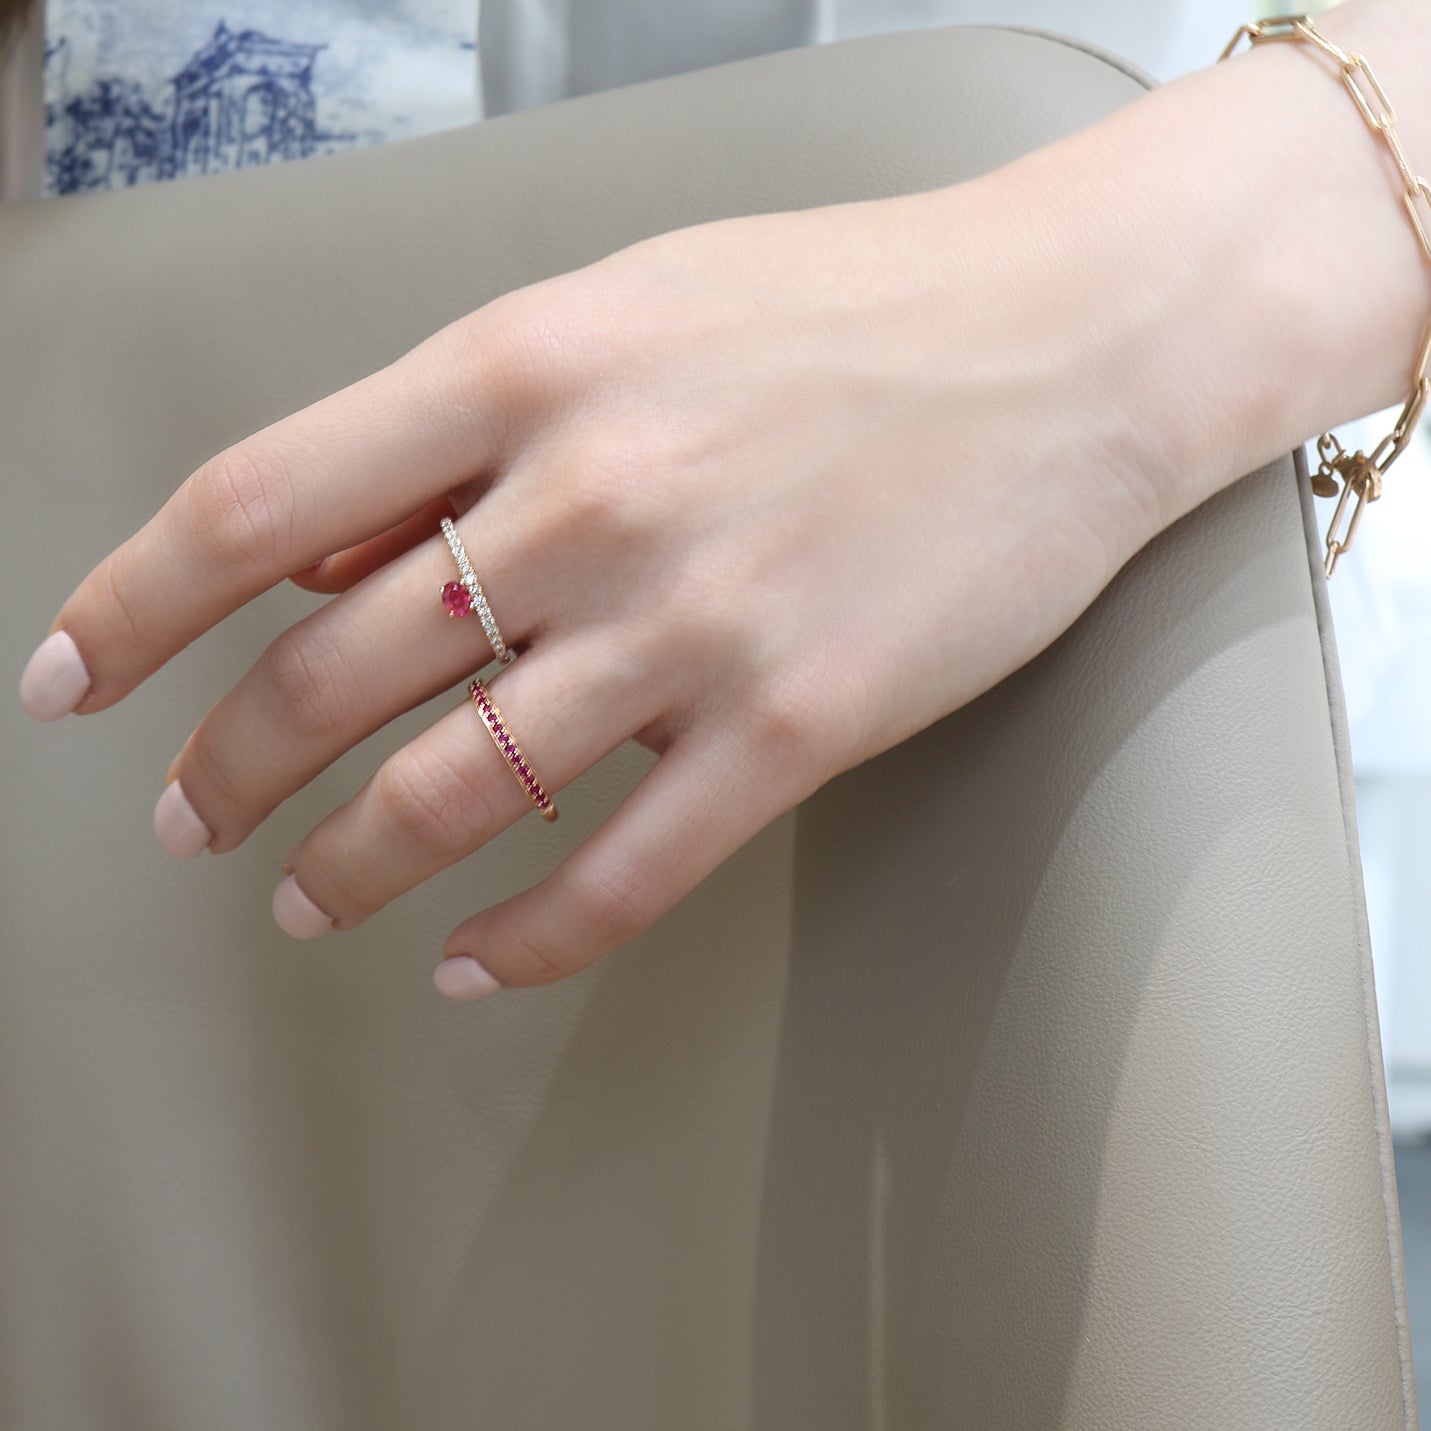 紅寶石和藍寶石鑽石戒指在手指上 Ruby Eternity Ring and sapphire ring on fingers